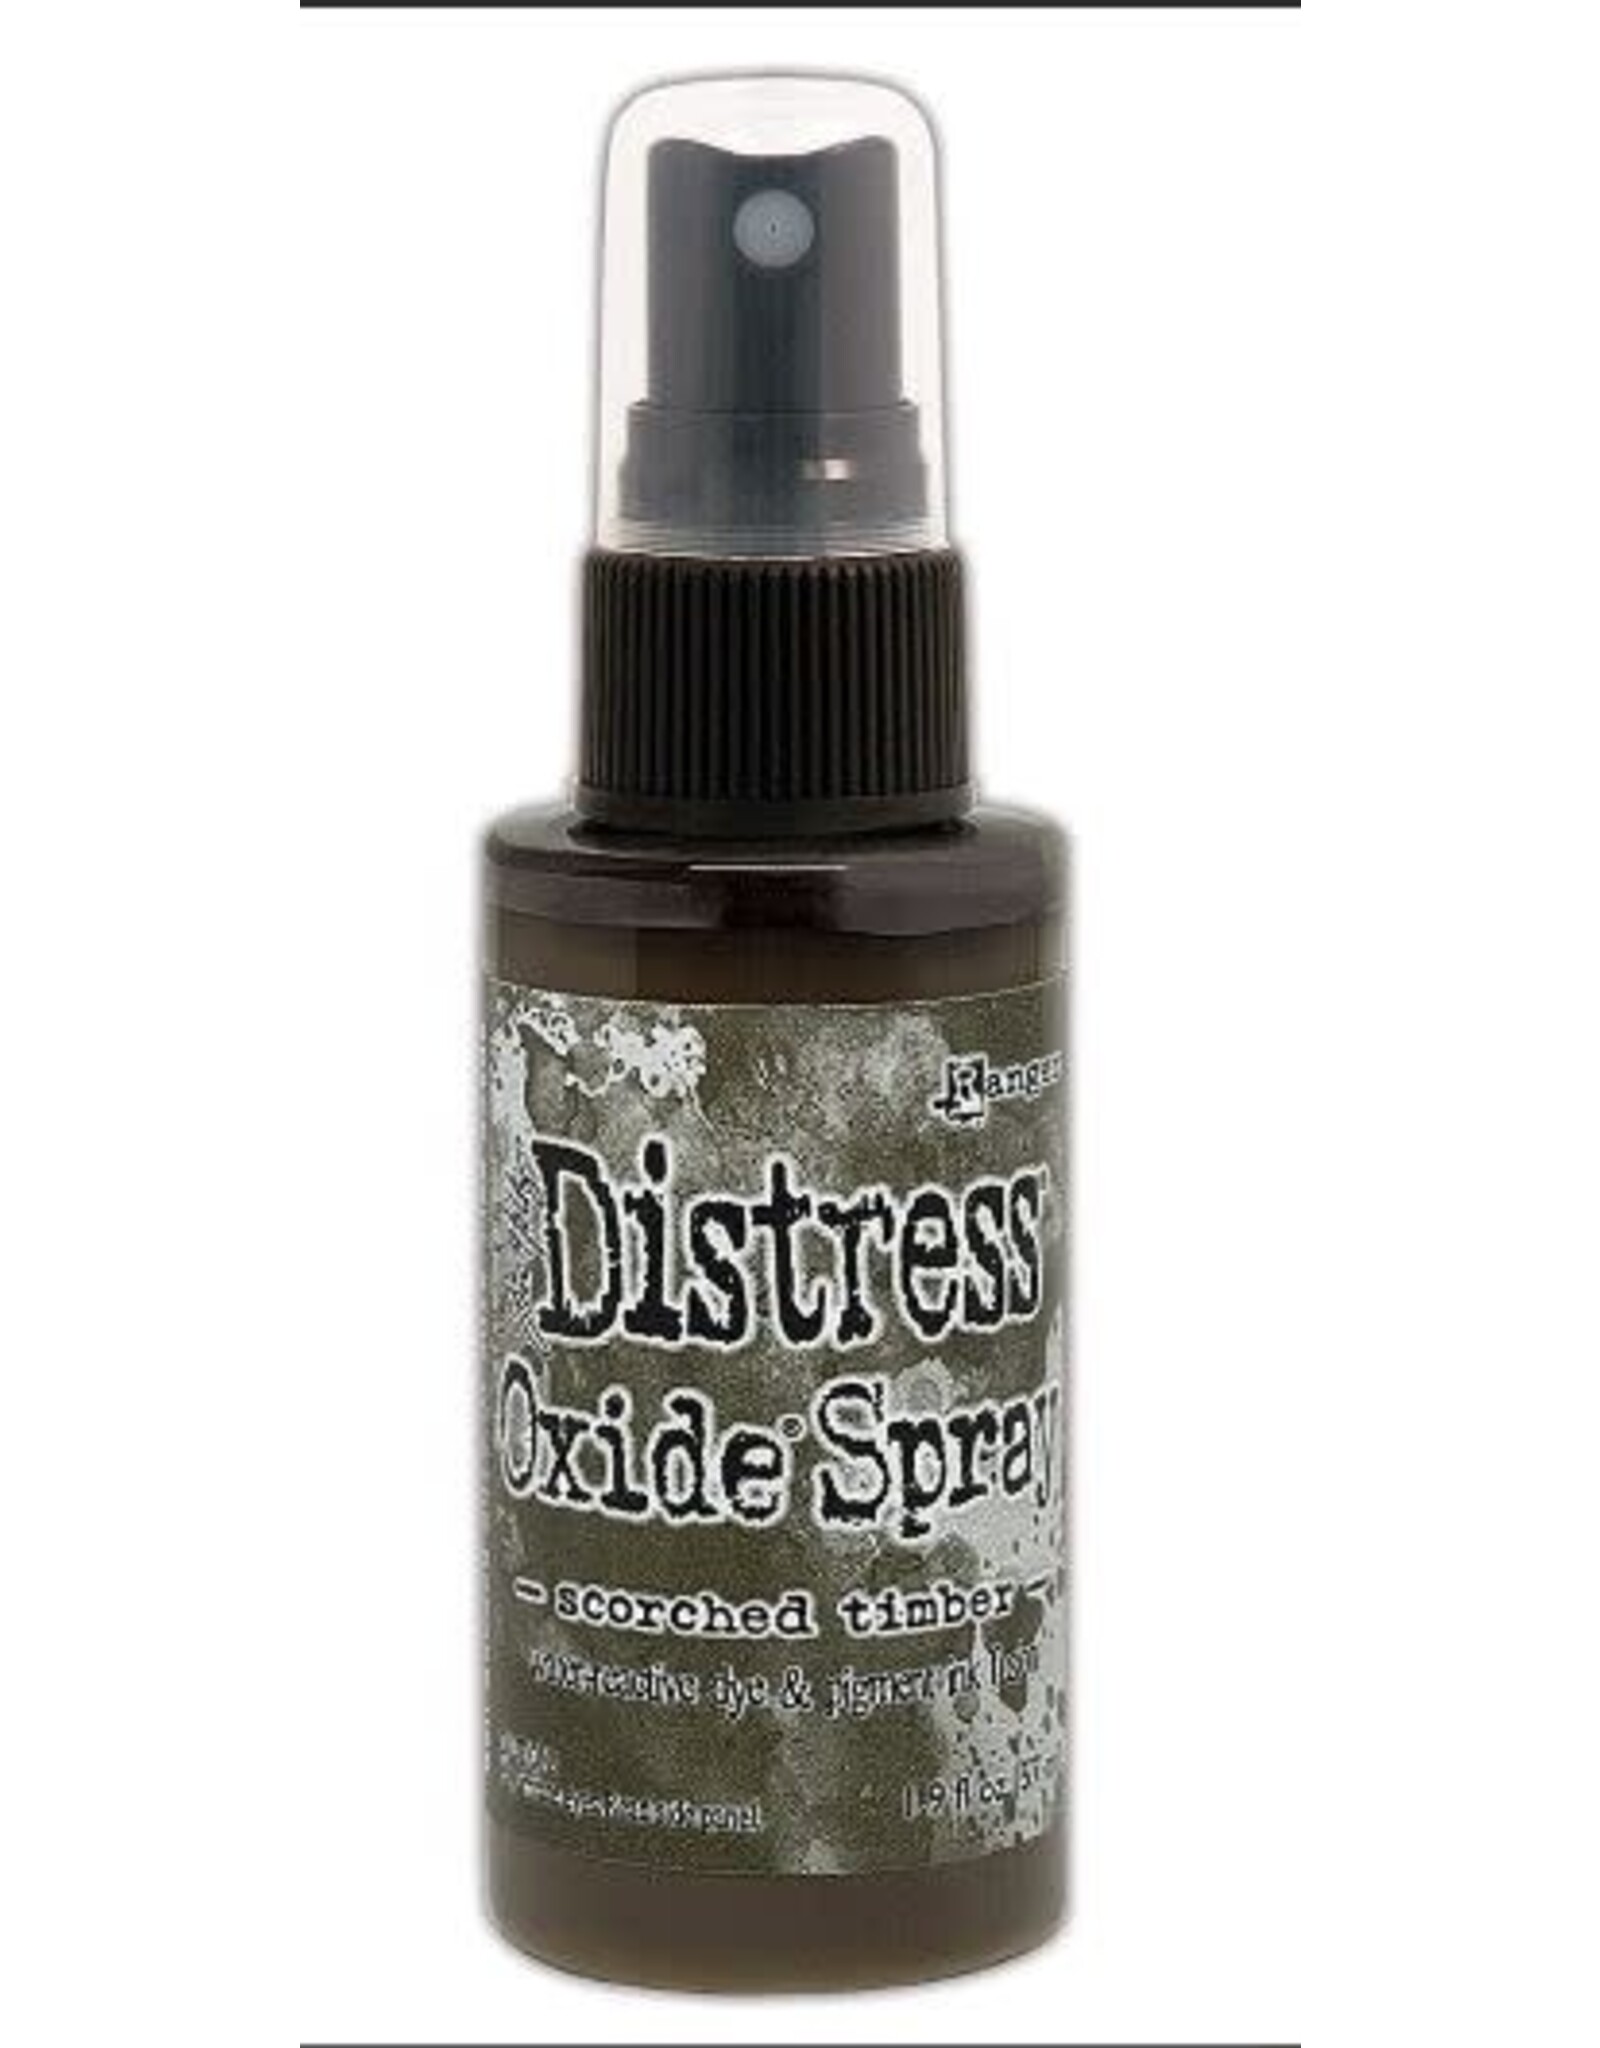 Tim Holtz - Ranger Distress Oxide Spray - Scorched Timber